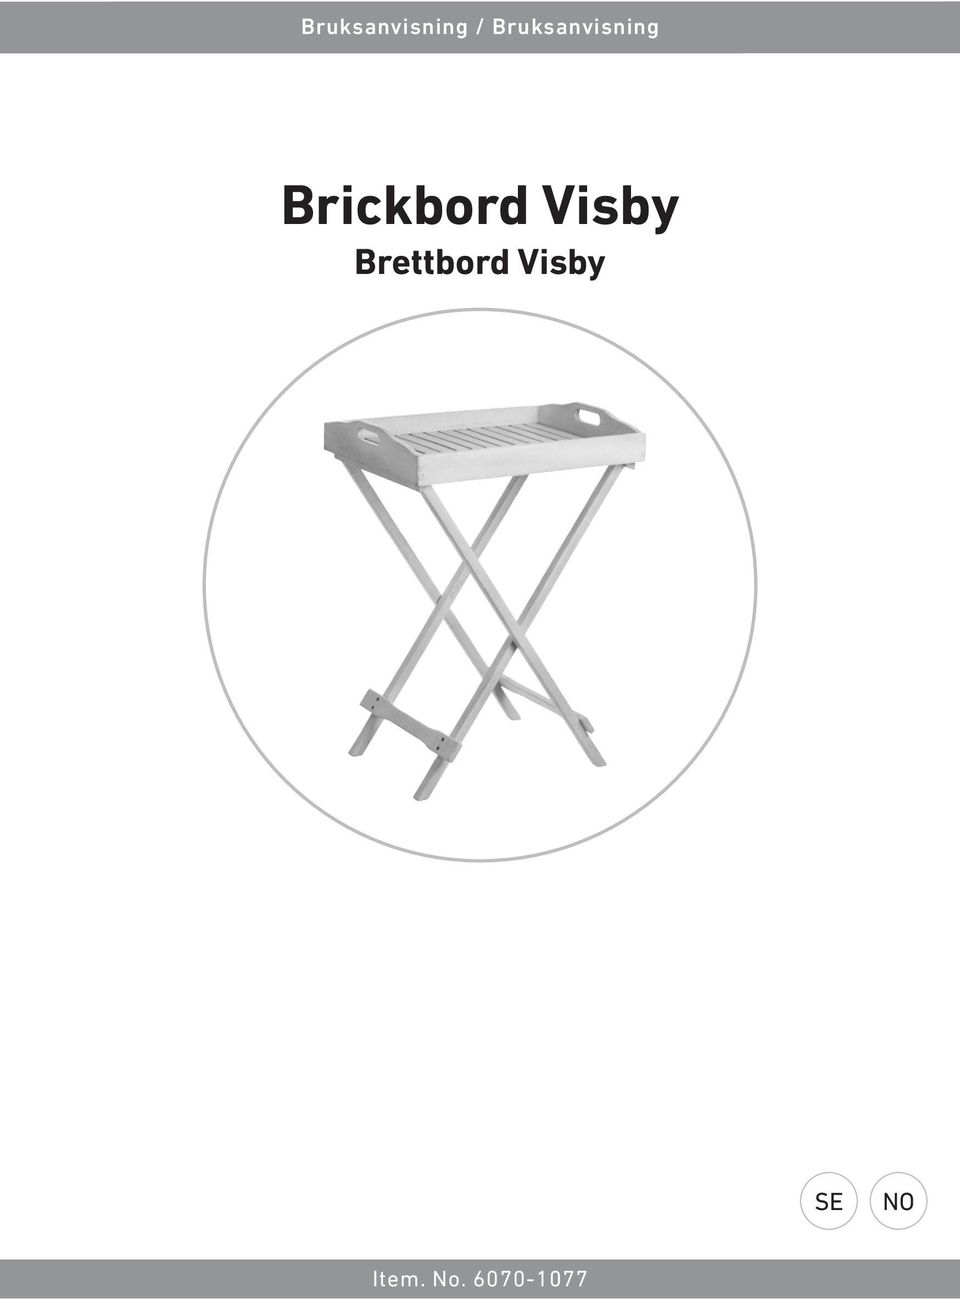 Brickbord Visby